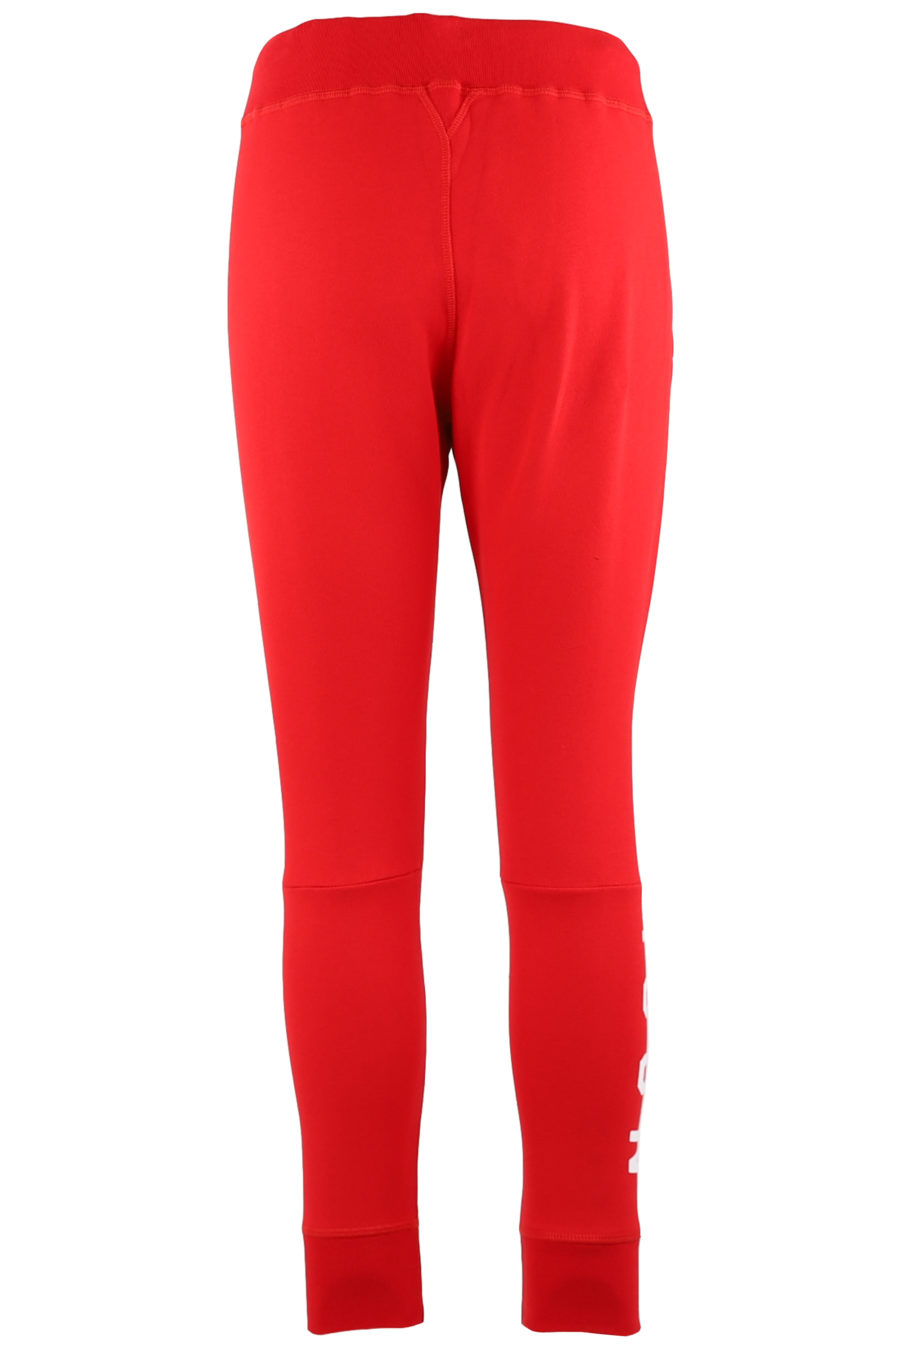 Pantalón de chándal rojo con logo blanco "Icon" - d1aa3f562fe8adbbc892f22965757824eea91dfb